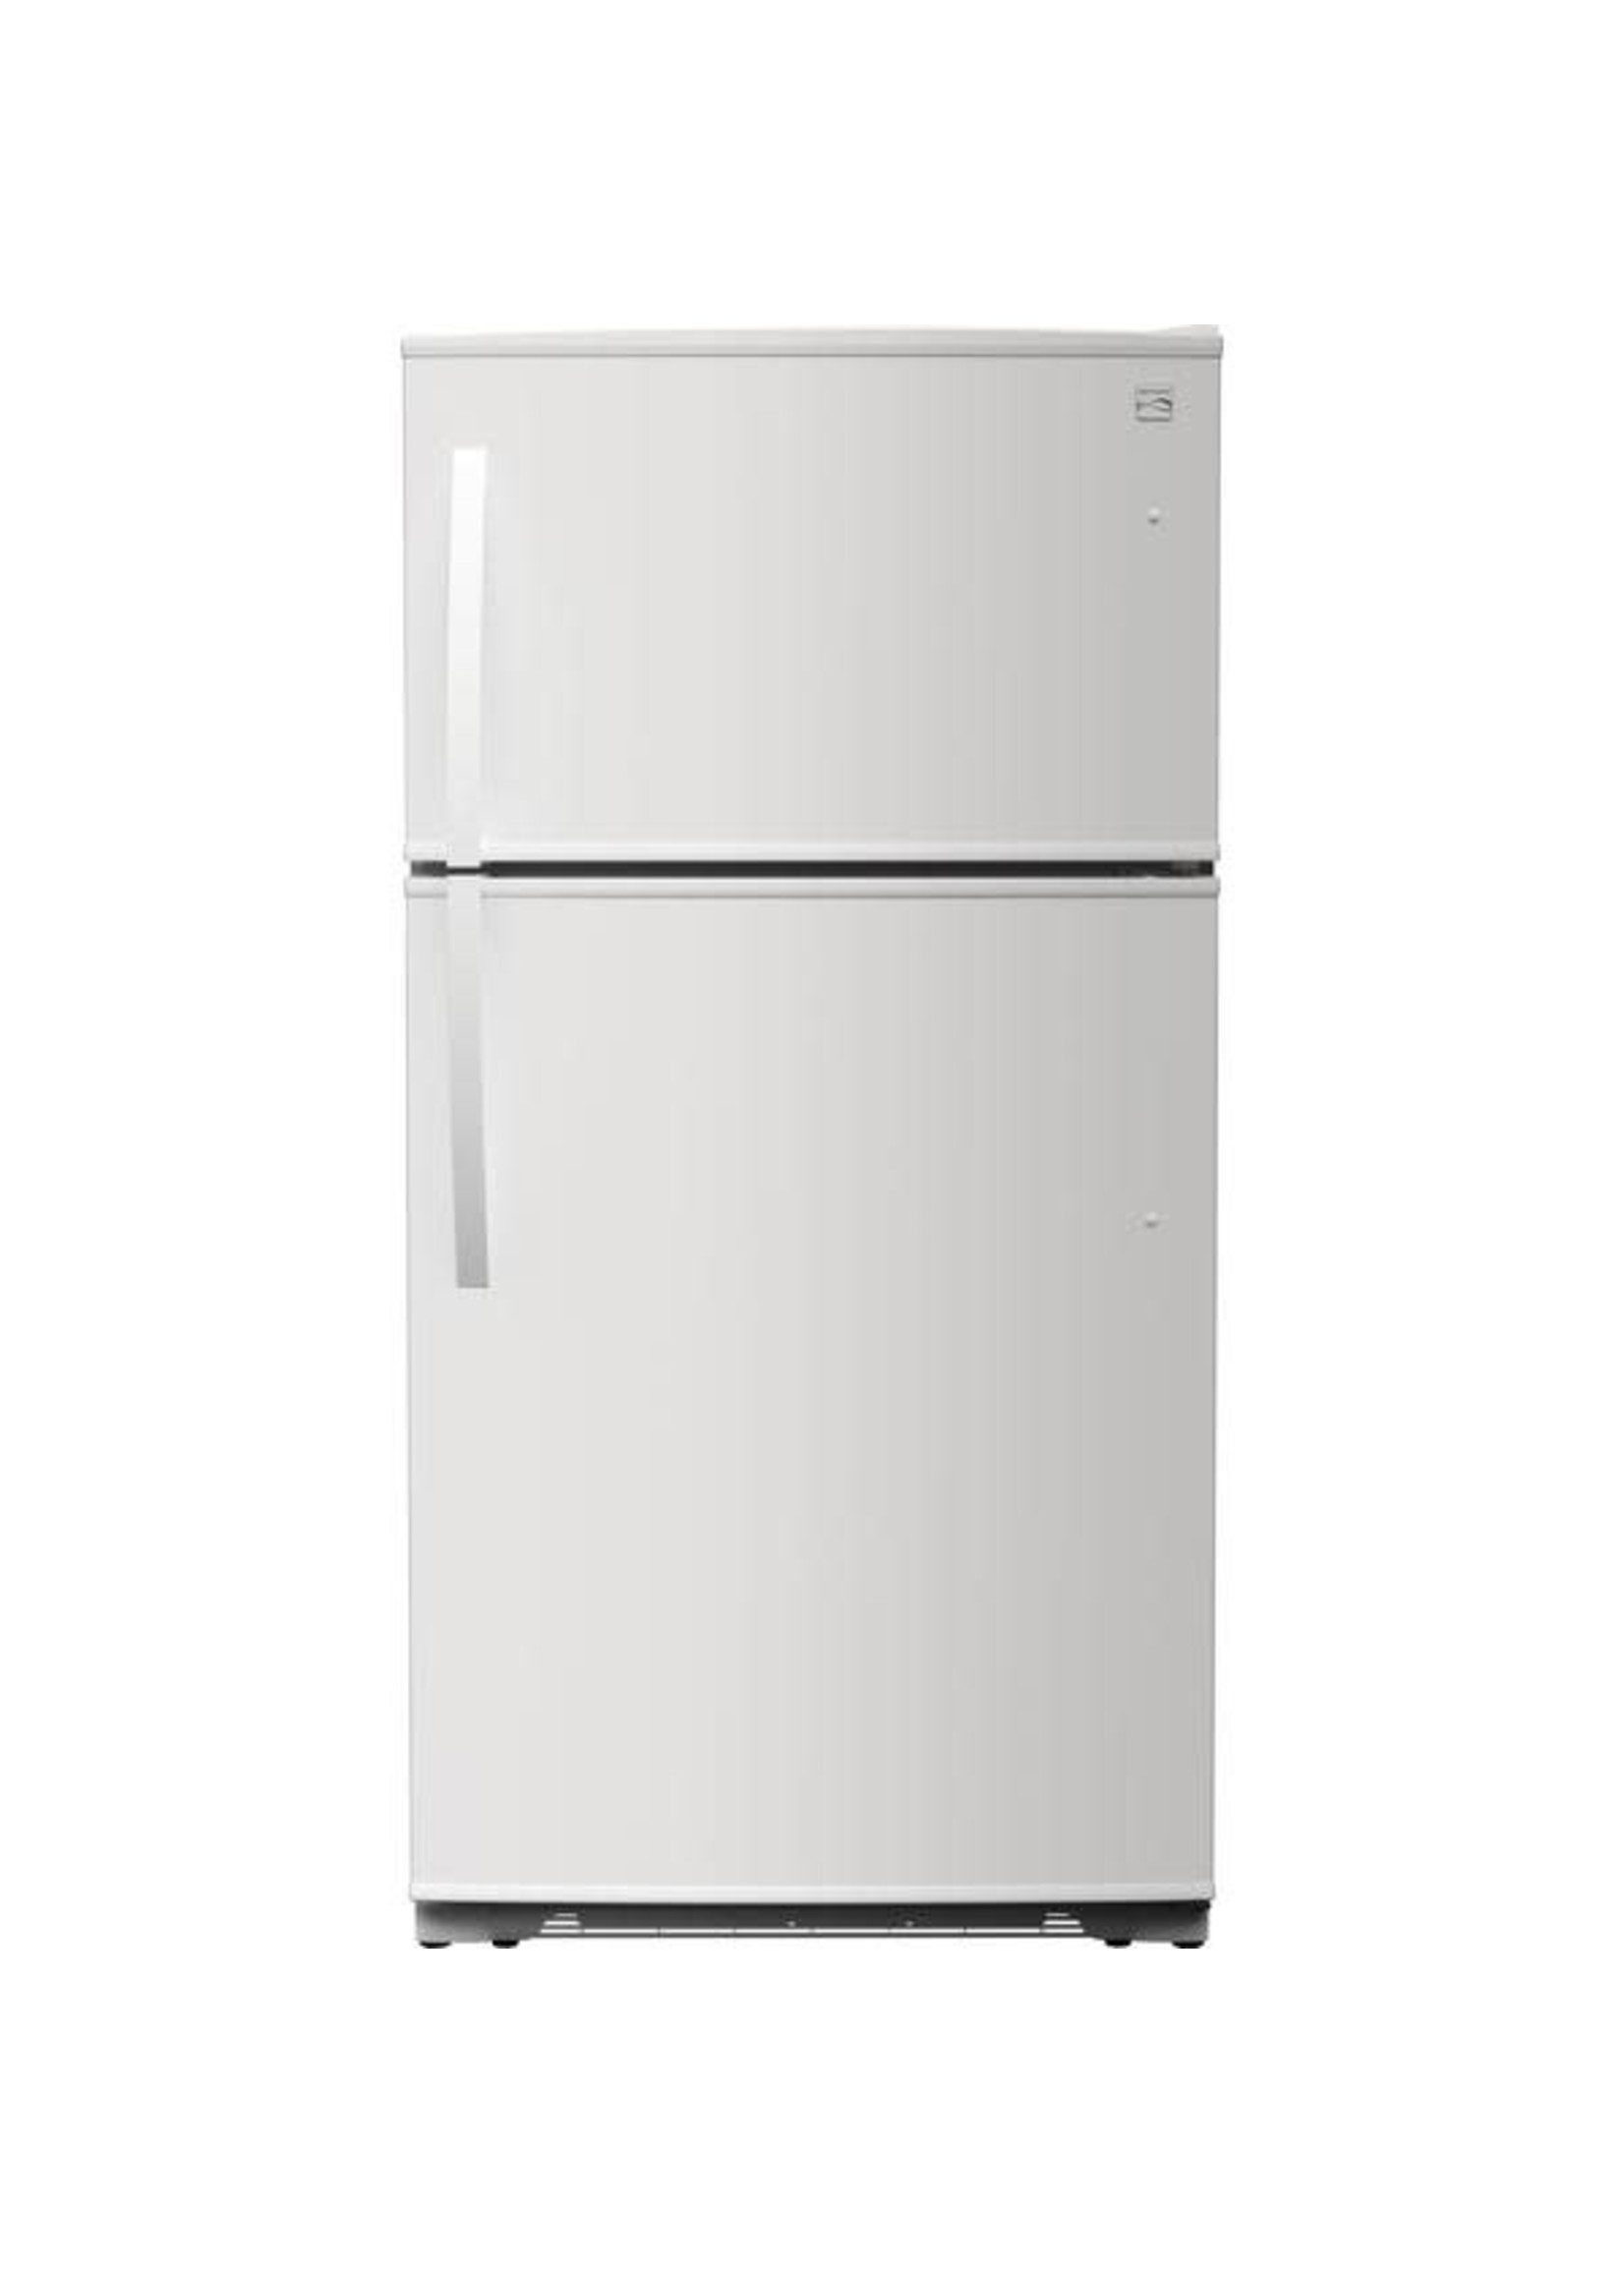 Kenmore Kenmore 61202 21 cu. ft. Top-Freezer Refrigerator - White